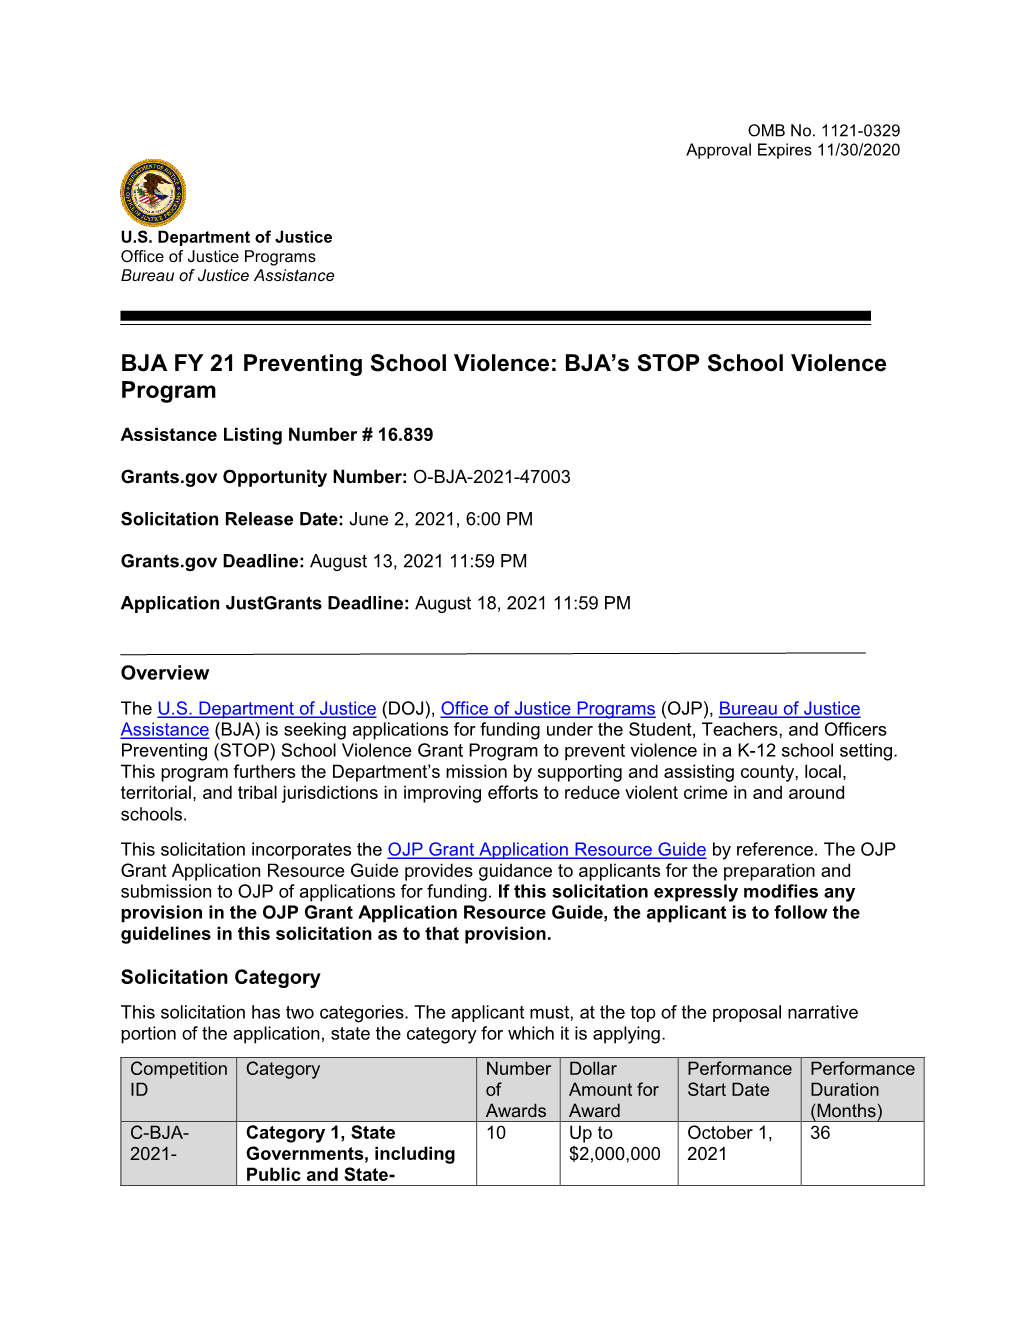 BJA's STOP School Violence Program